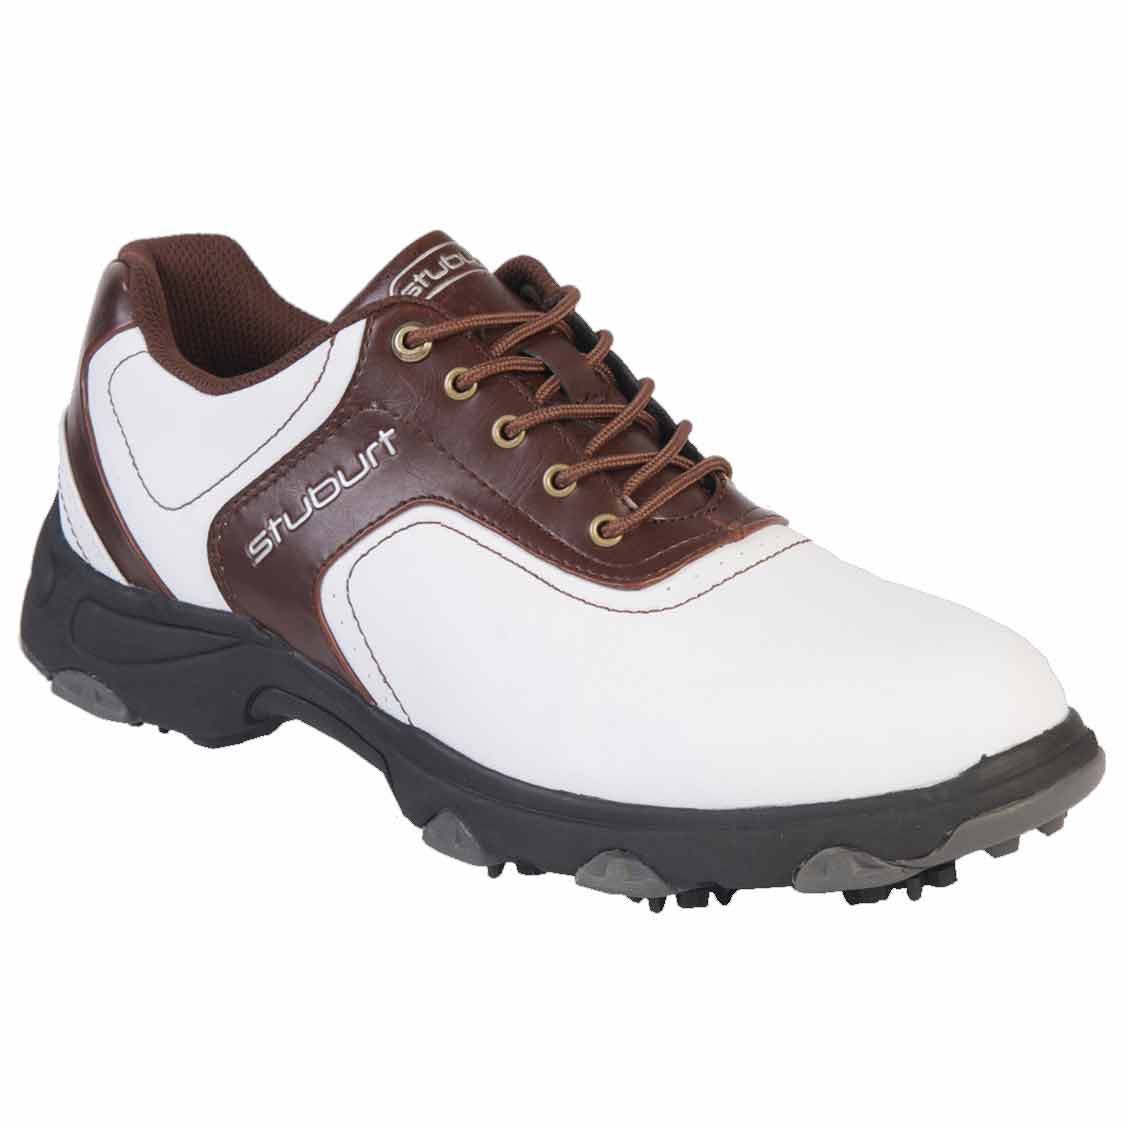 Stuburt Comfort XP Golf Shoes Mens -